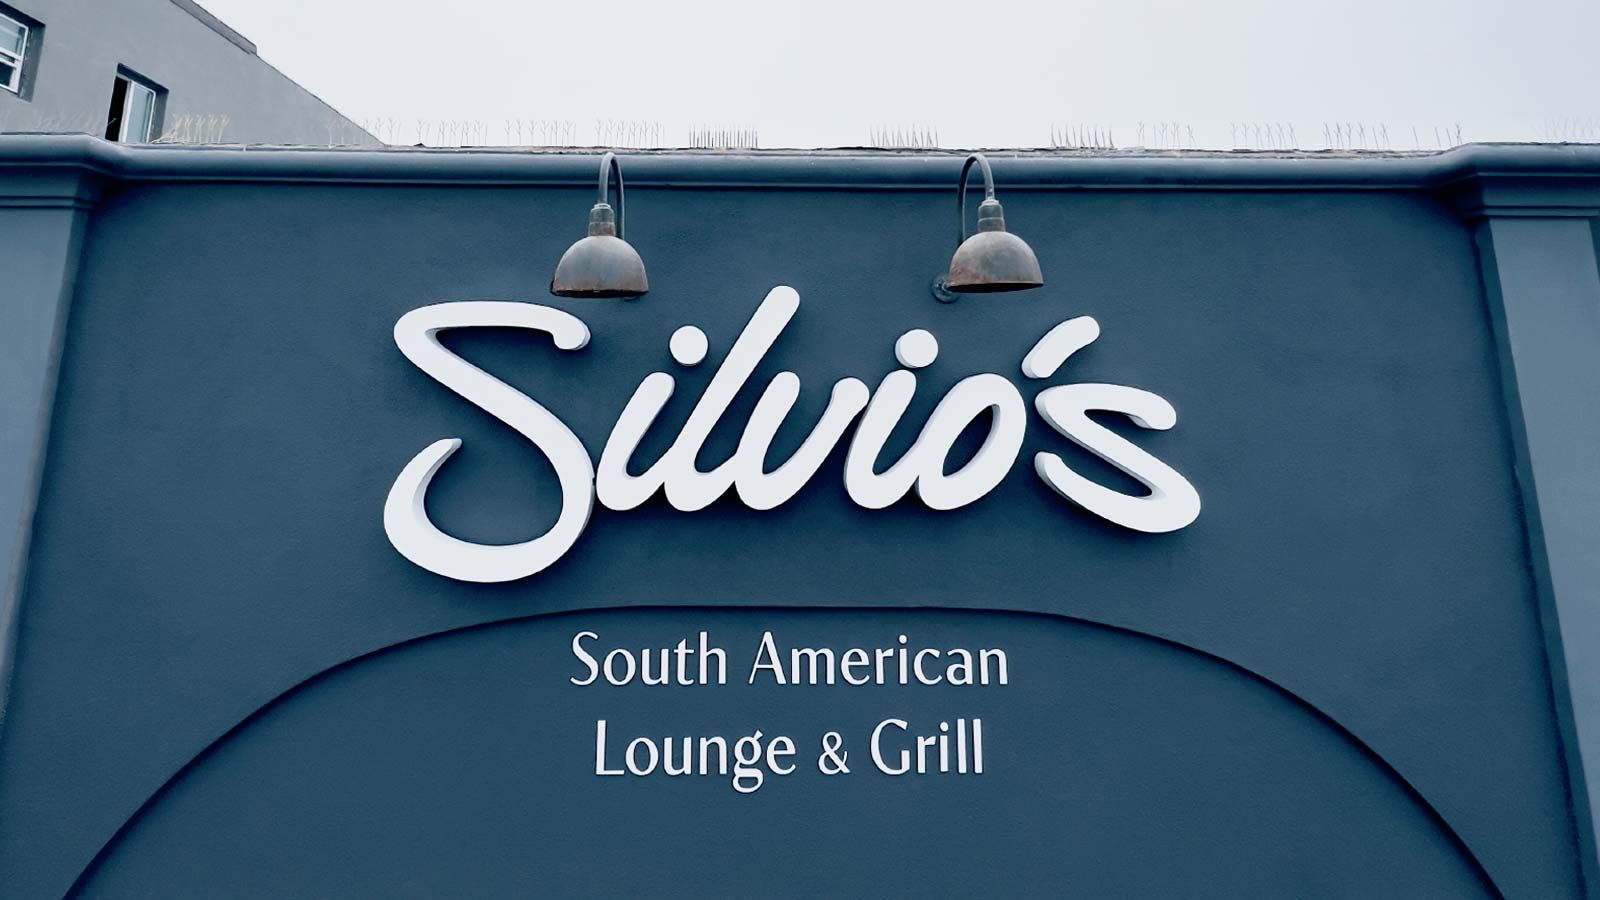 Silvio's restaurant sign installed outdoors